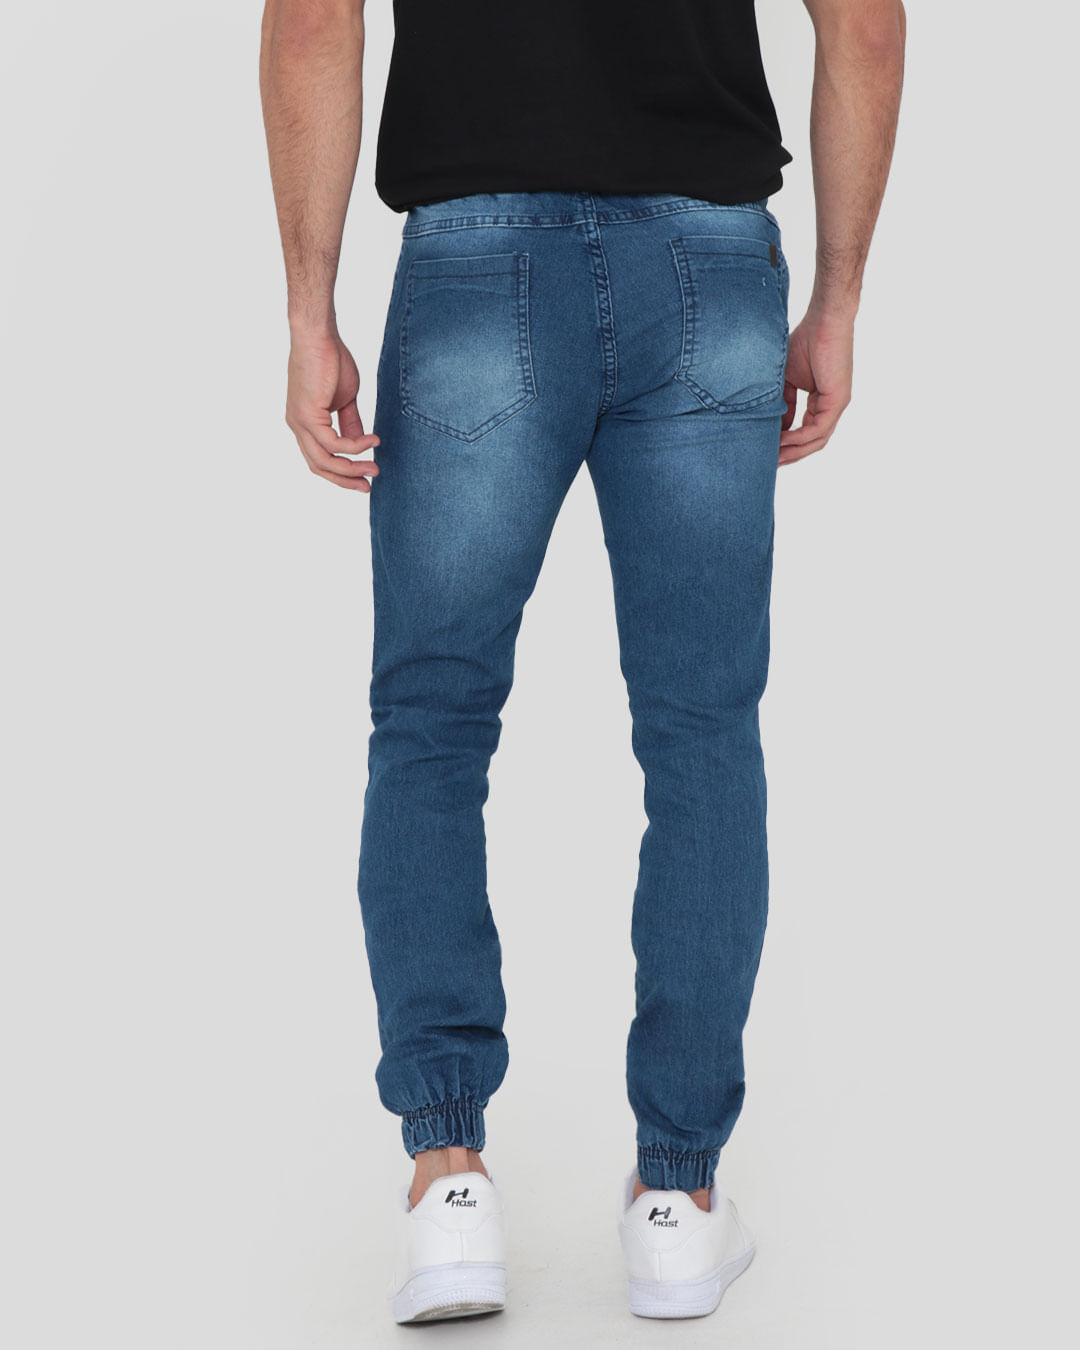 23121000995045-blue-jeans-medio-3